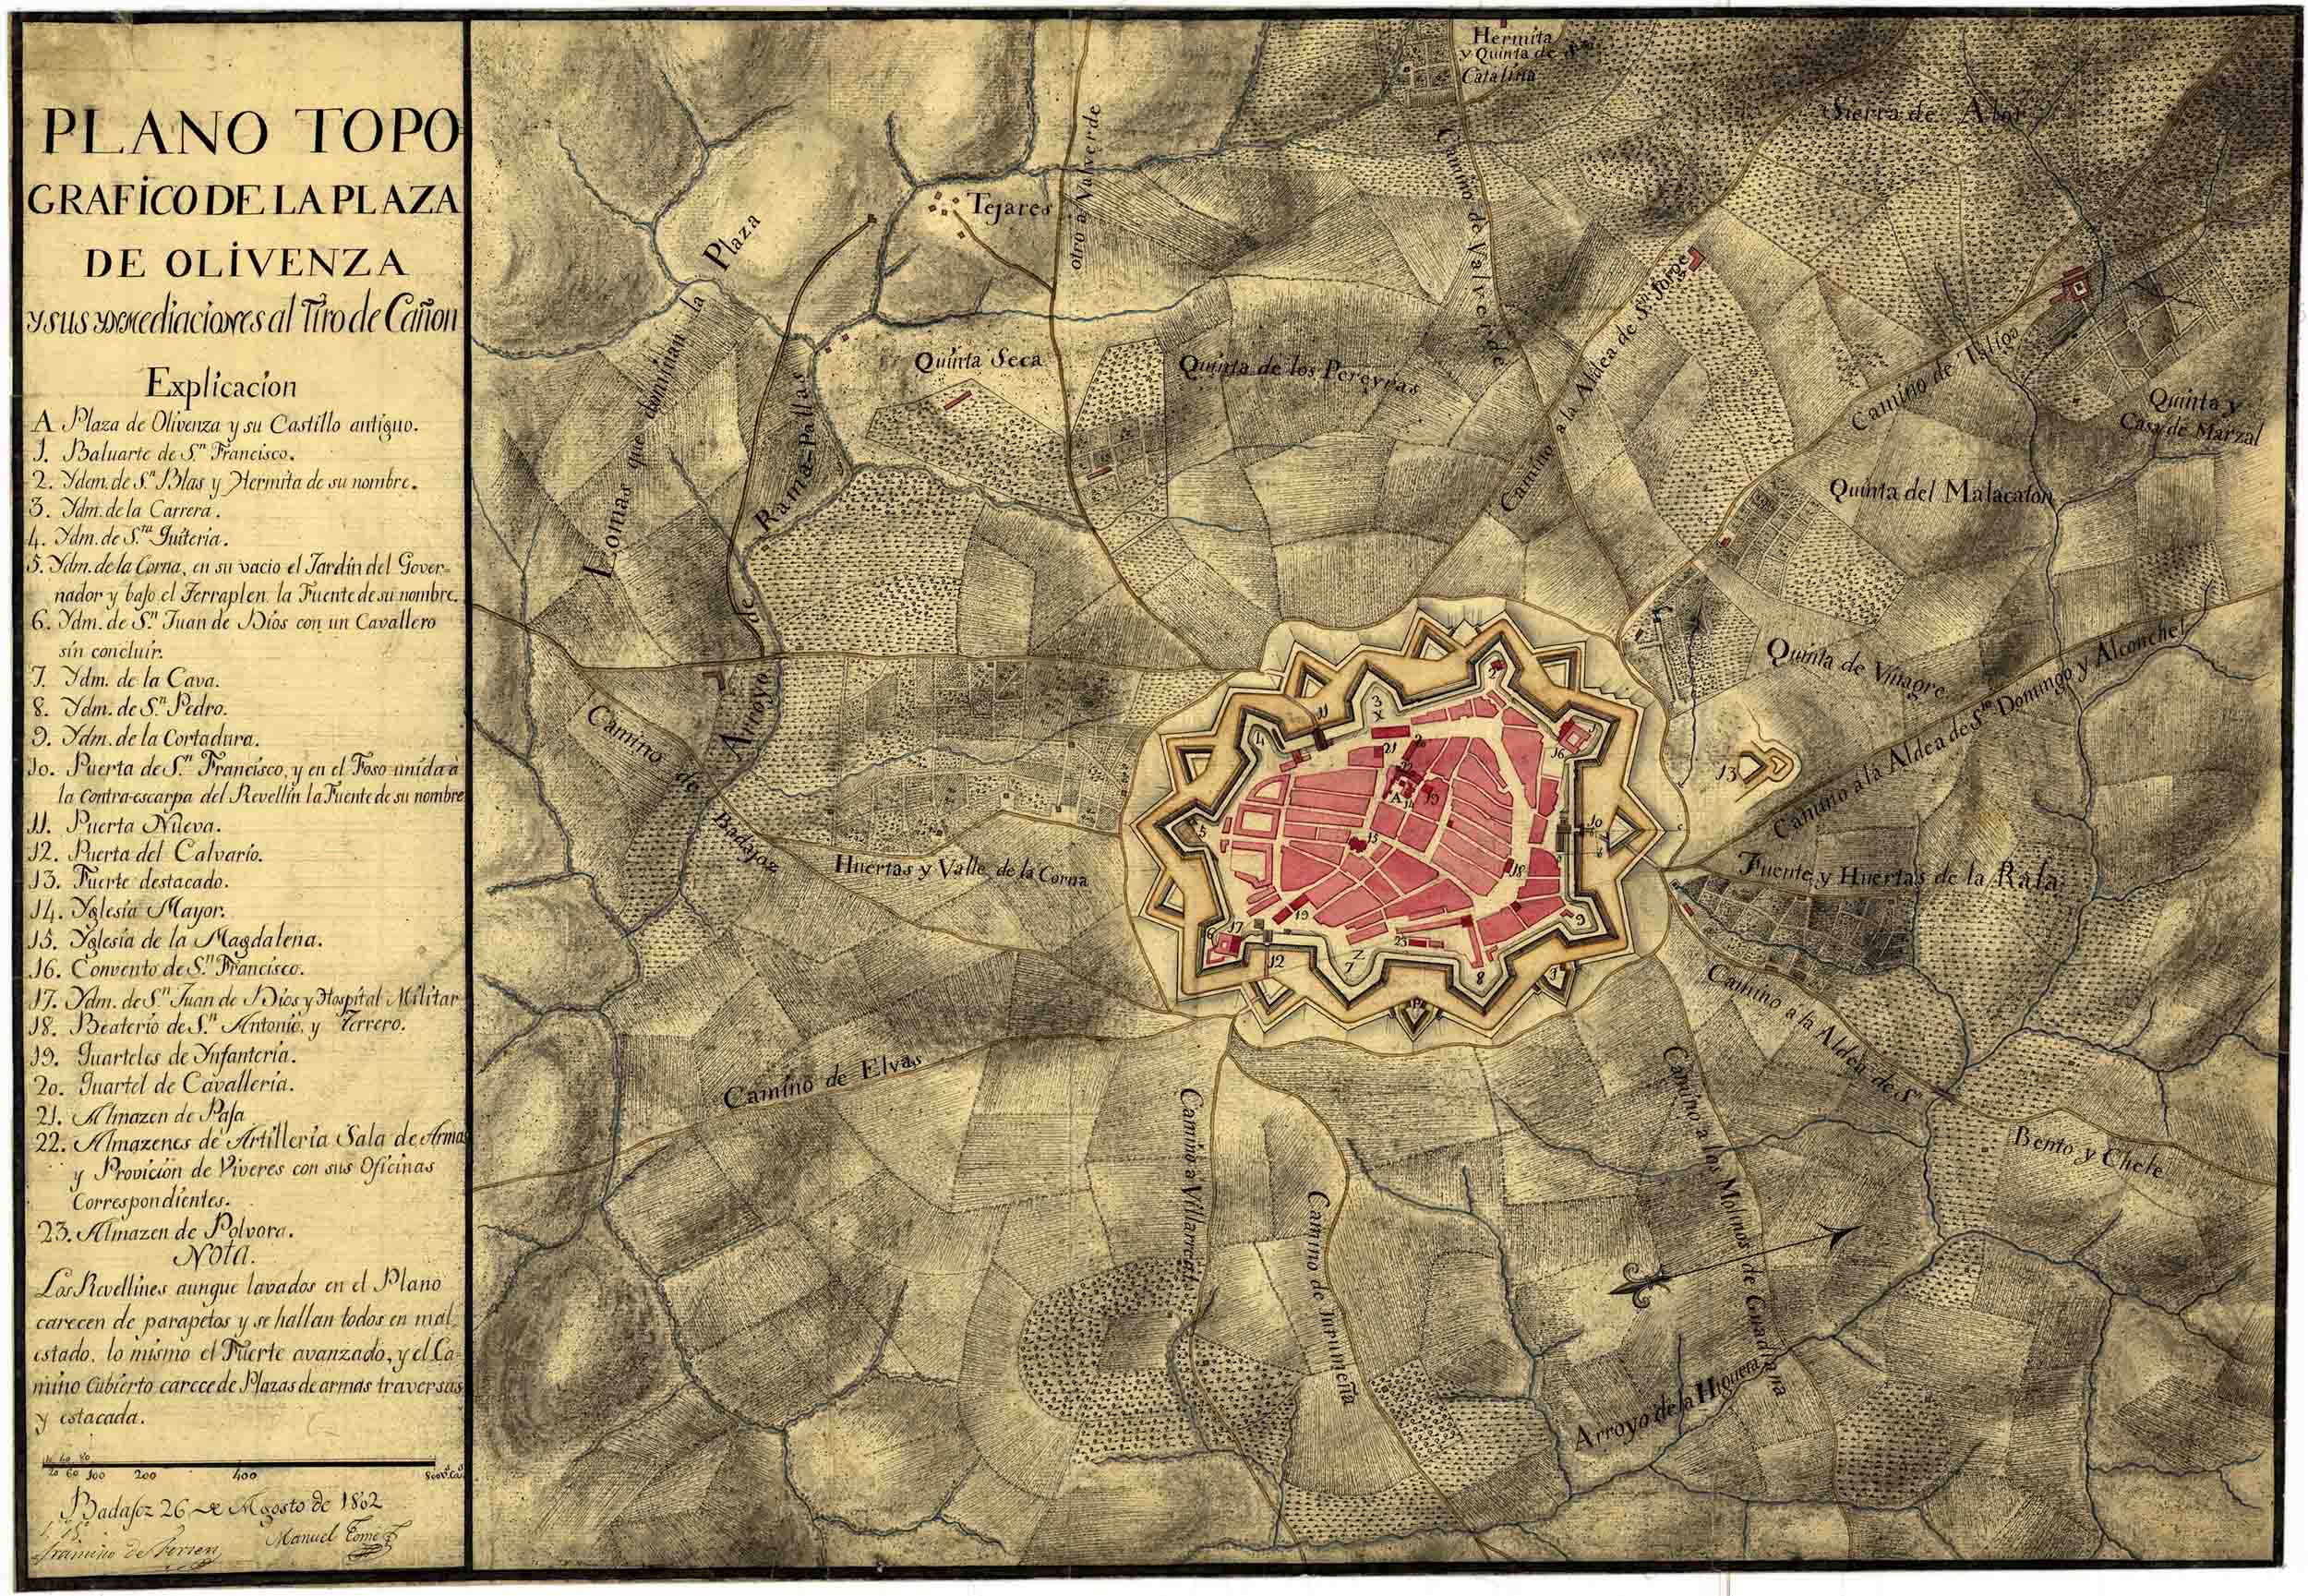 Plano topografico de la plaza de Olivenza